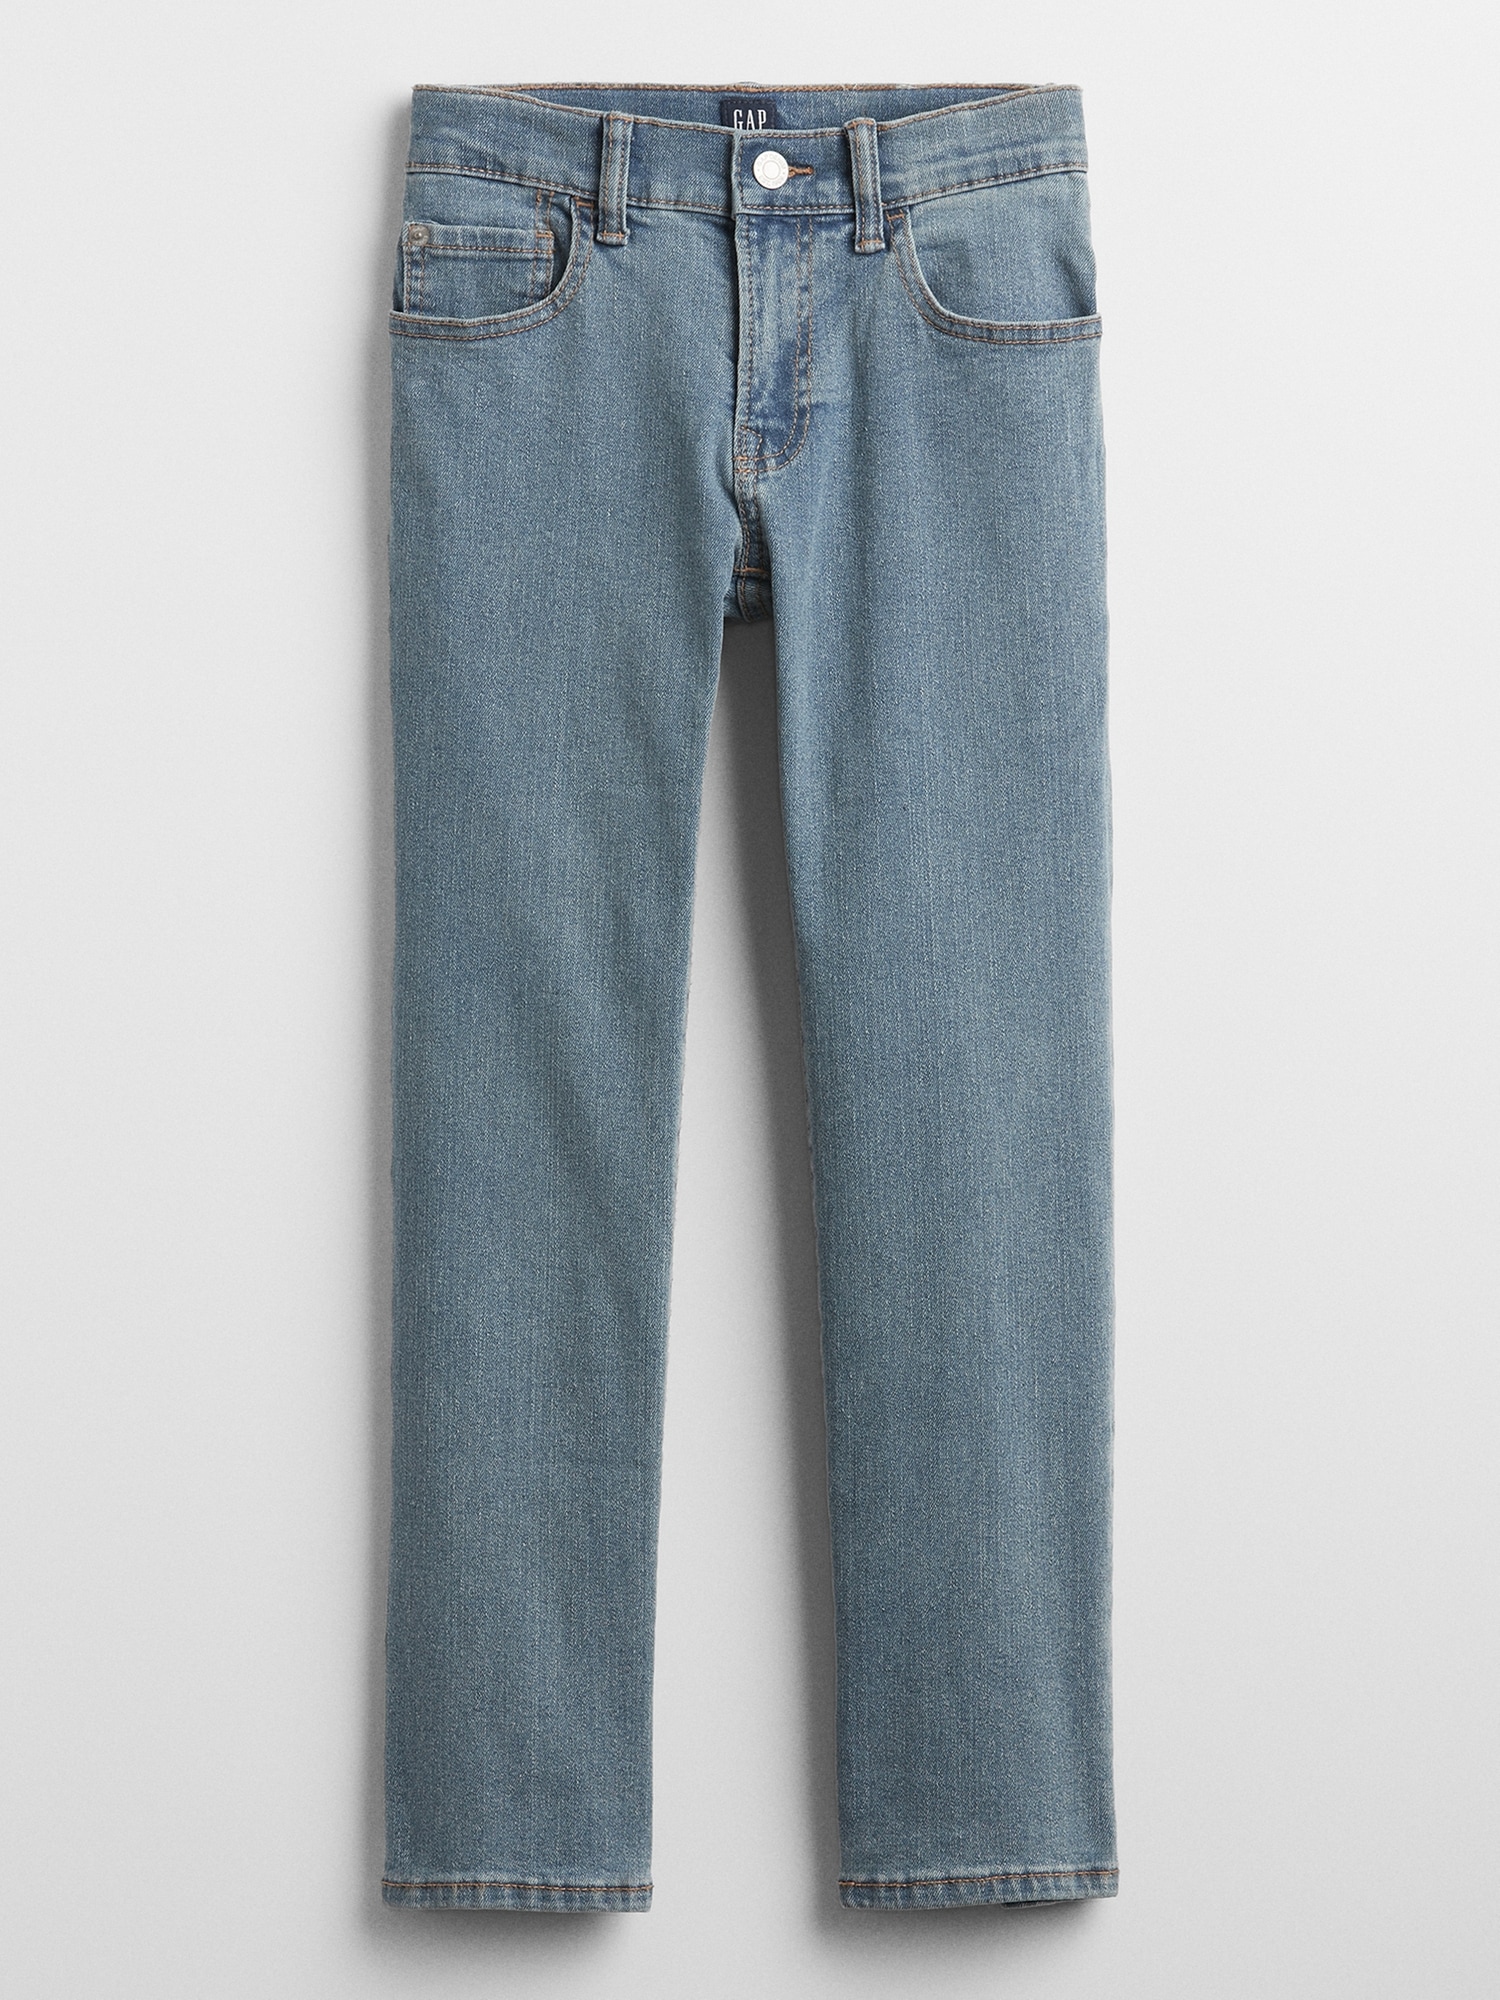 Gap  Jean fits, Slim jeans, Jeans fit